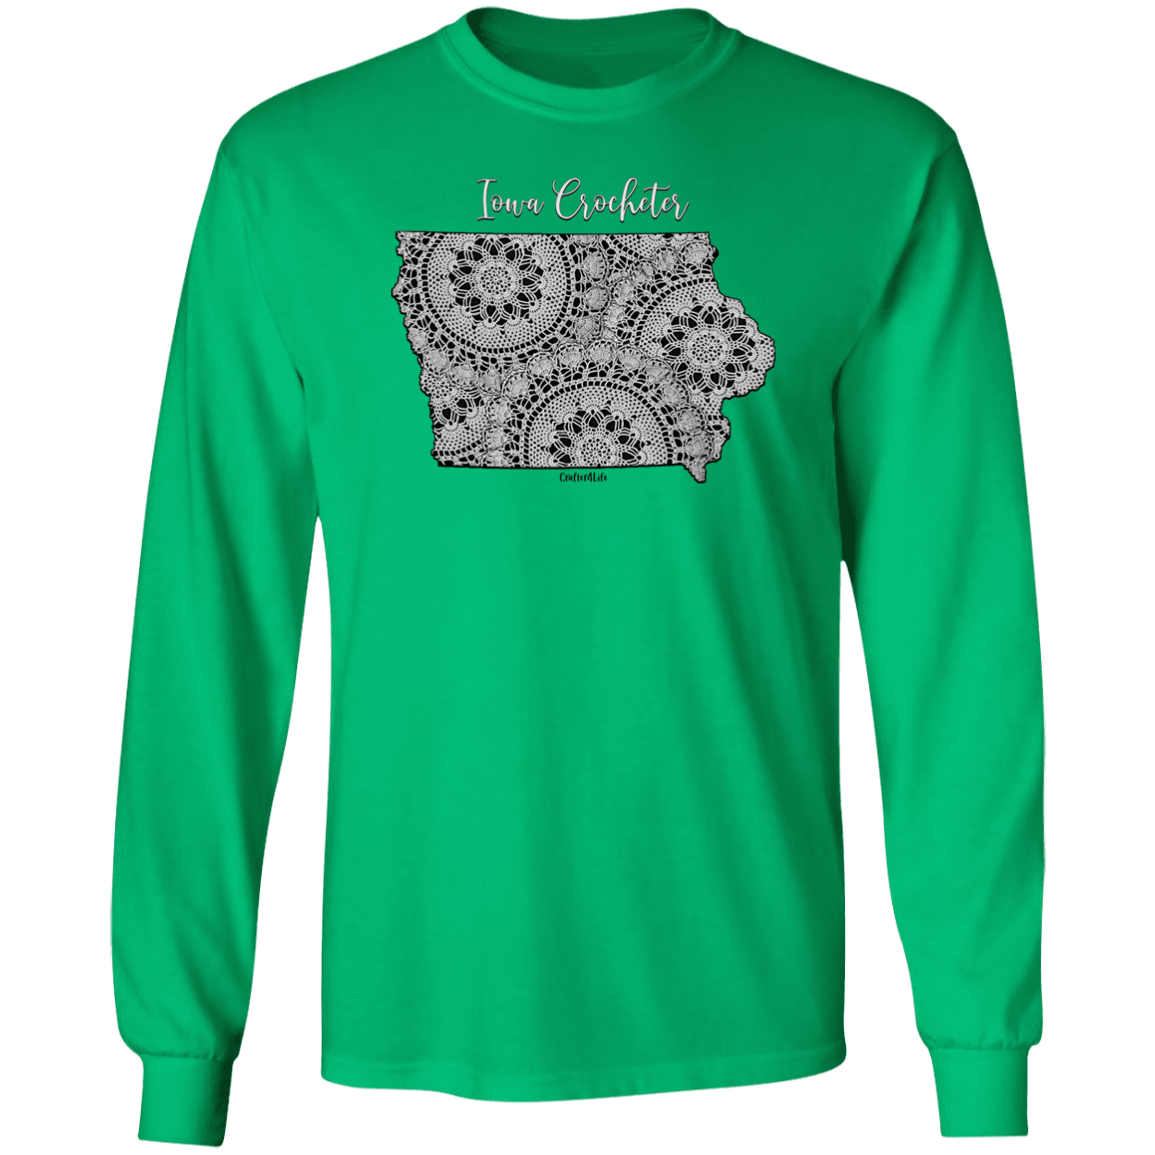 Iowa Crocheter LS Ultra Cotton T-Shirt